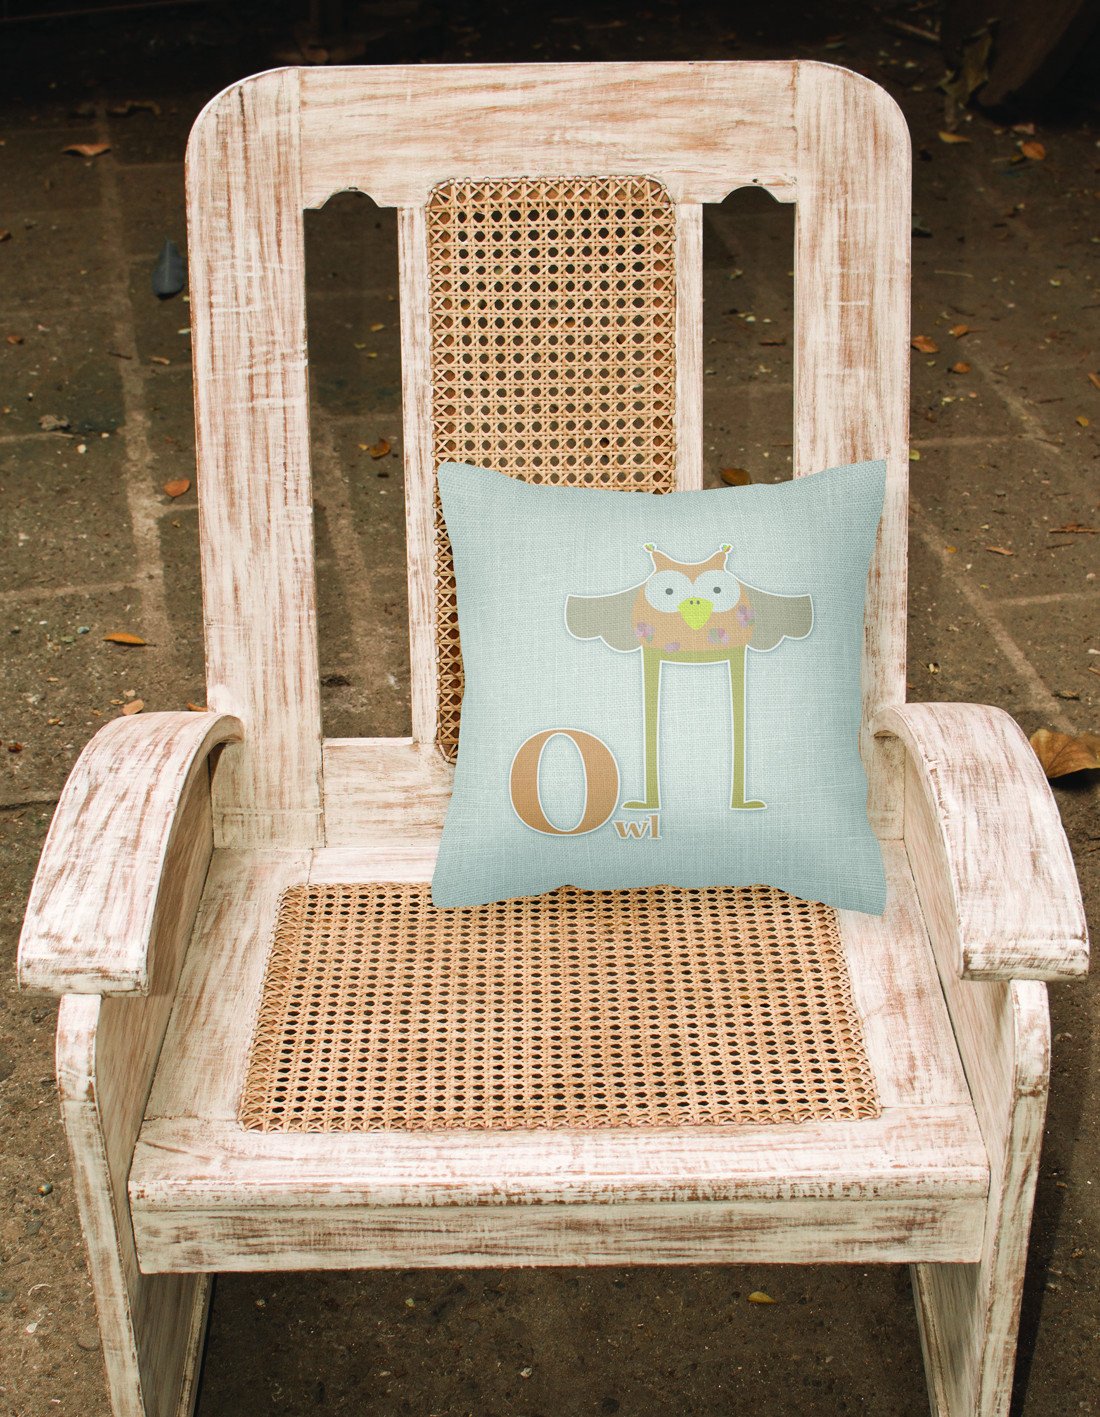 Alphabet O for Owl Fabric Decorative Pillow BB5740PW1818 by Caroline's Treasures